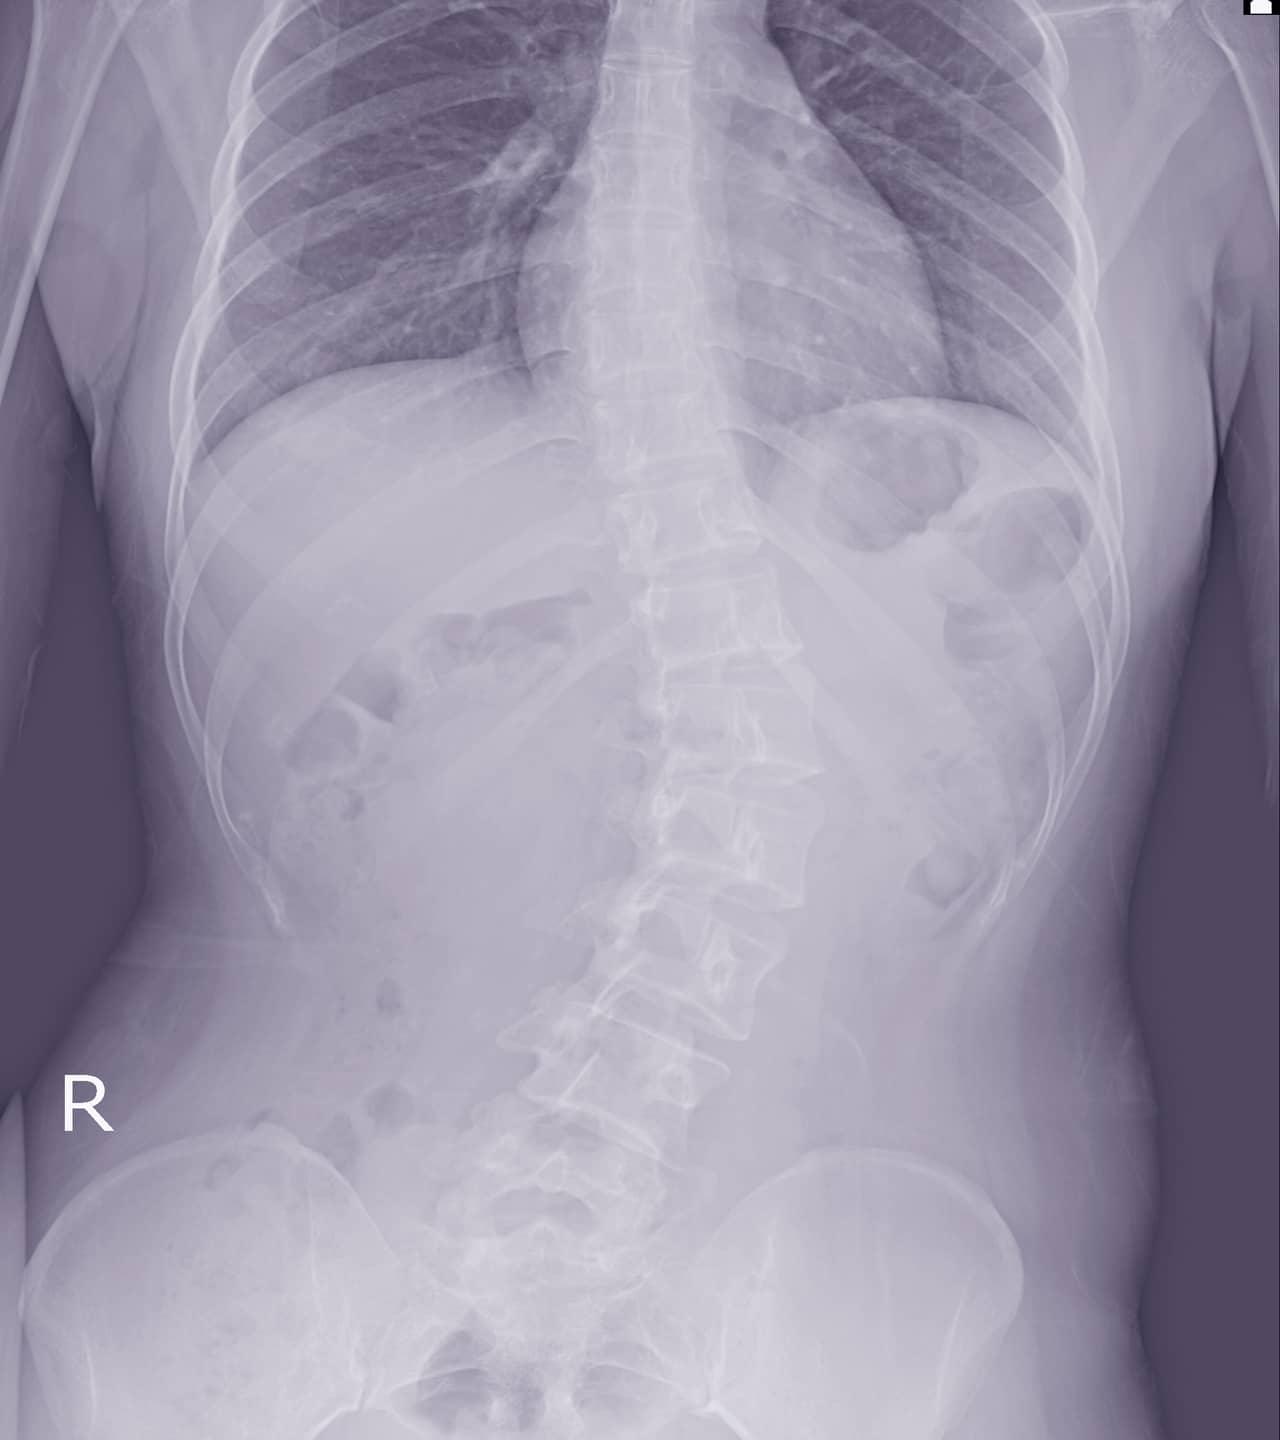 scoliosis- teen spine injury